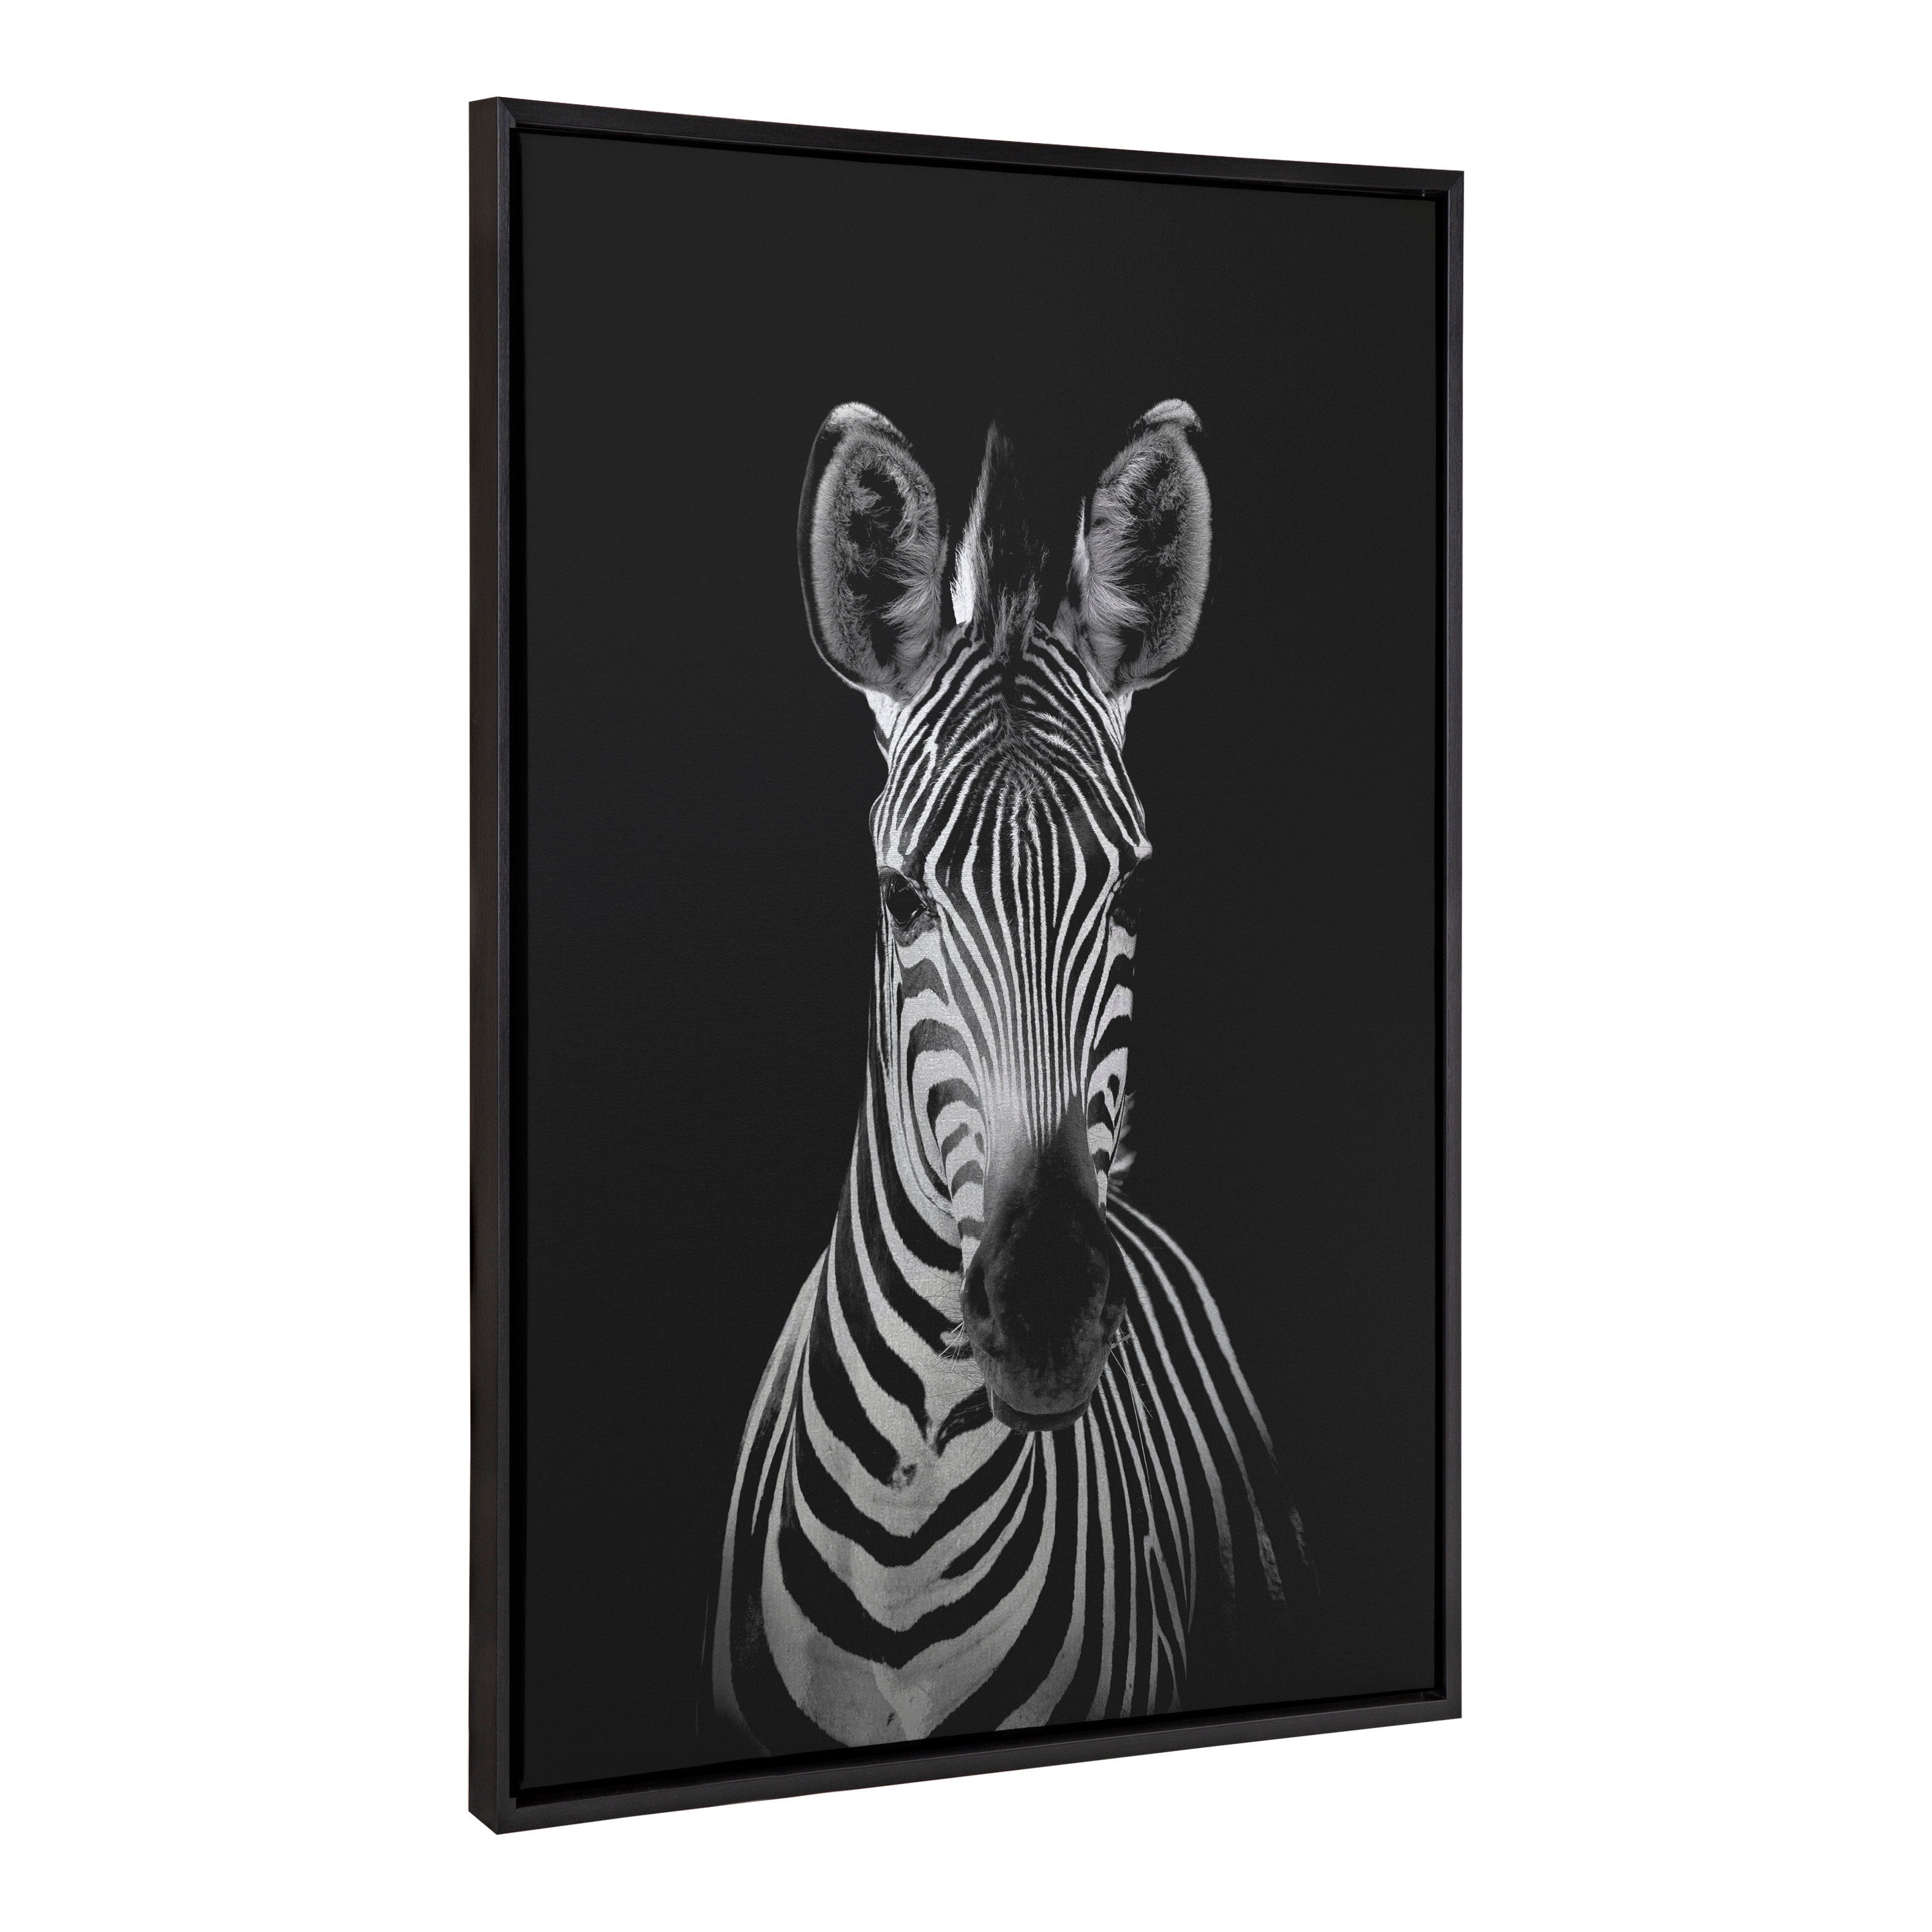 Sylvie Minimalist Zebra Animal Portrait on Black BW Framed Canvas by The Creative Bunch Studio